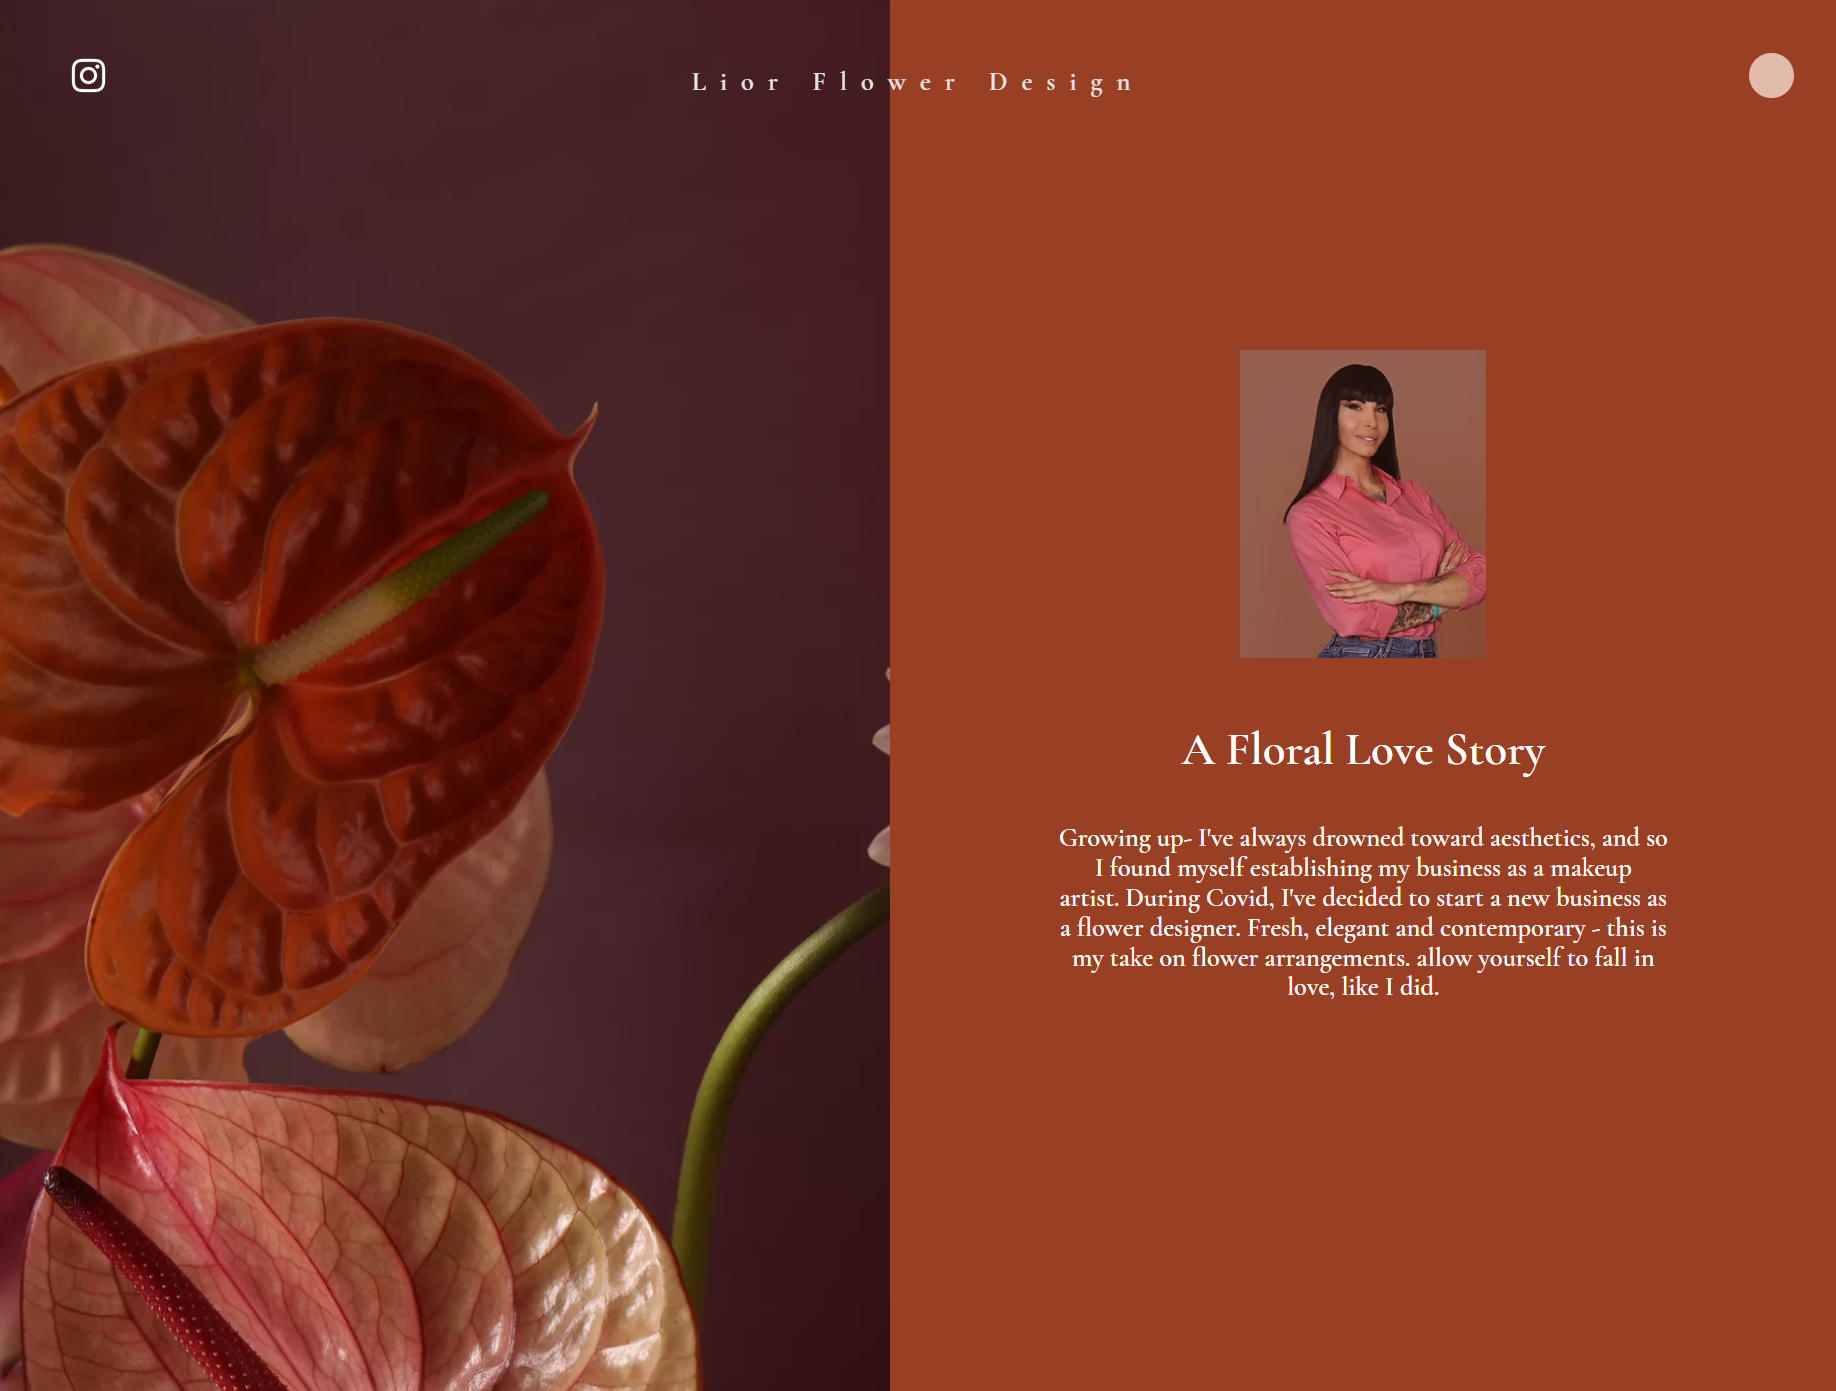 About us - Lior Flower Design